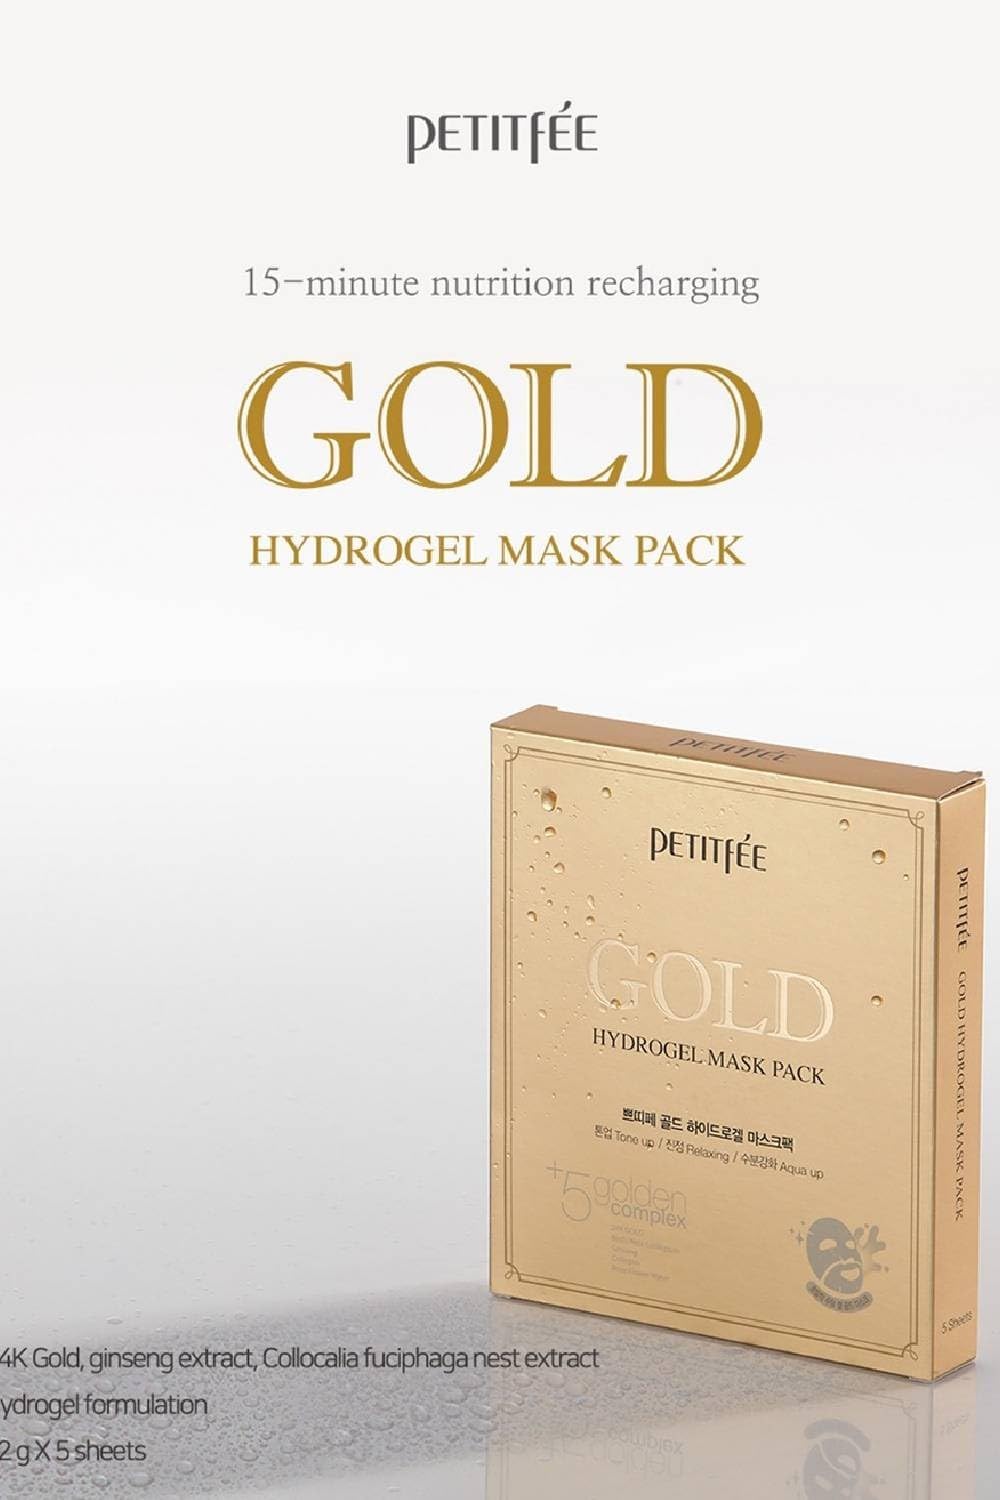 Petitfee Gold Hydrogel Maske Pack 5ea/Box